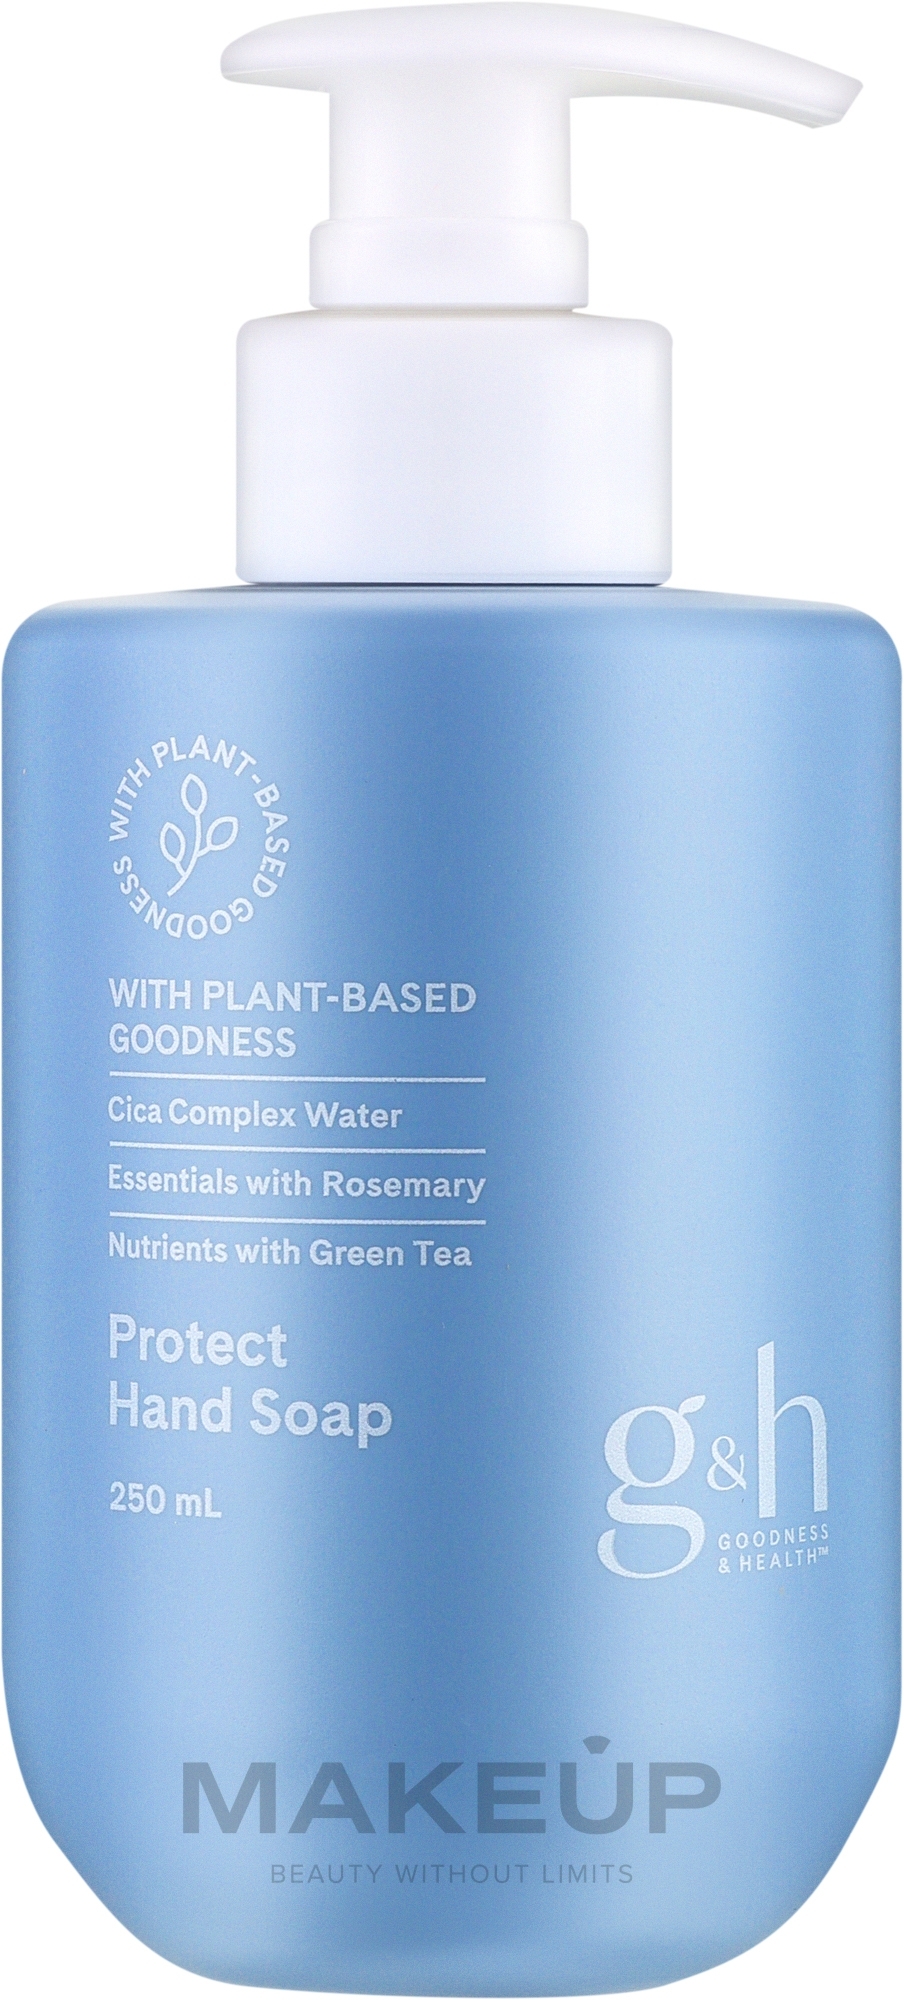 Захисне рідке мило для рук - Amway G&H Goodness & Health Protect Hand Soap — фото 250ml